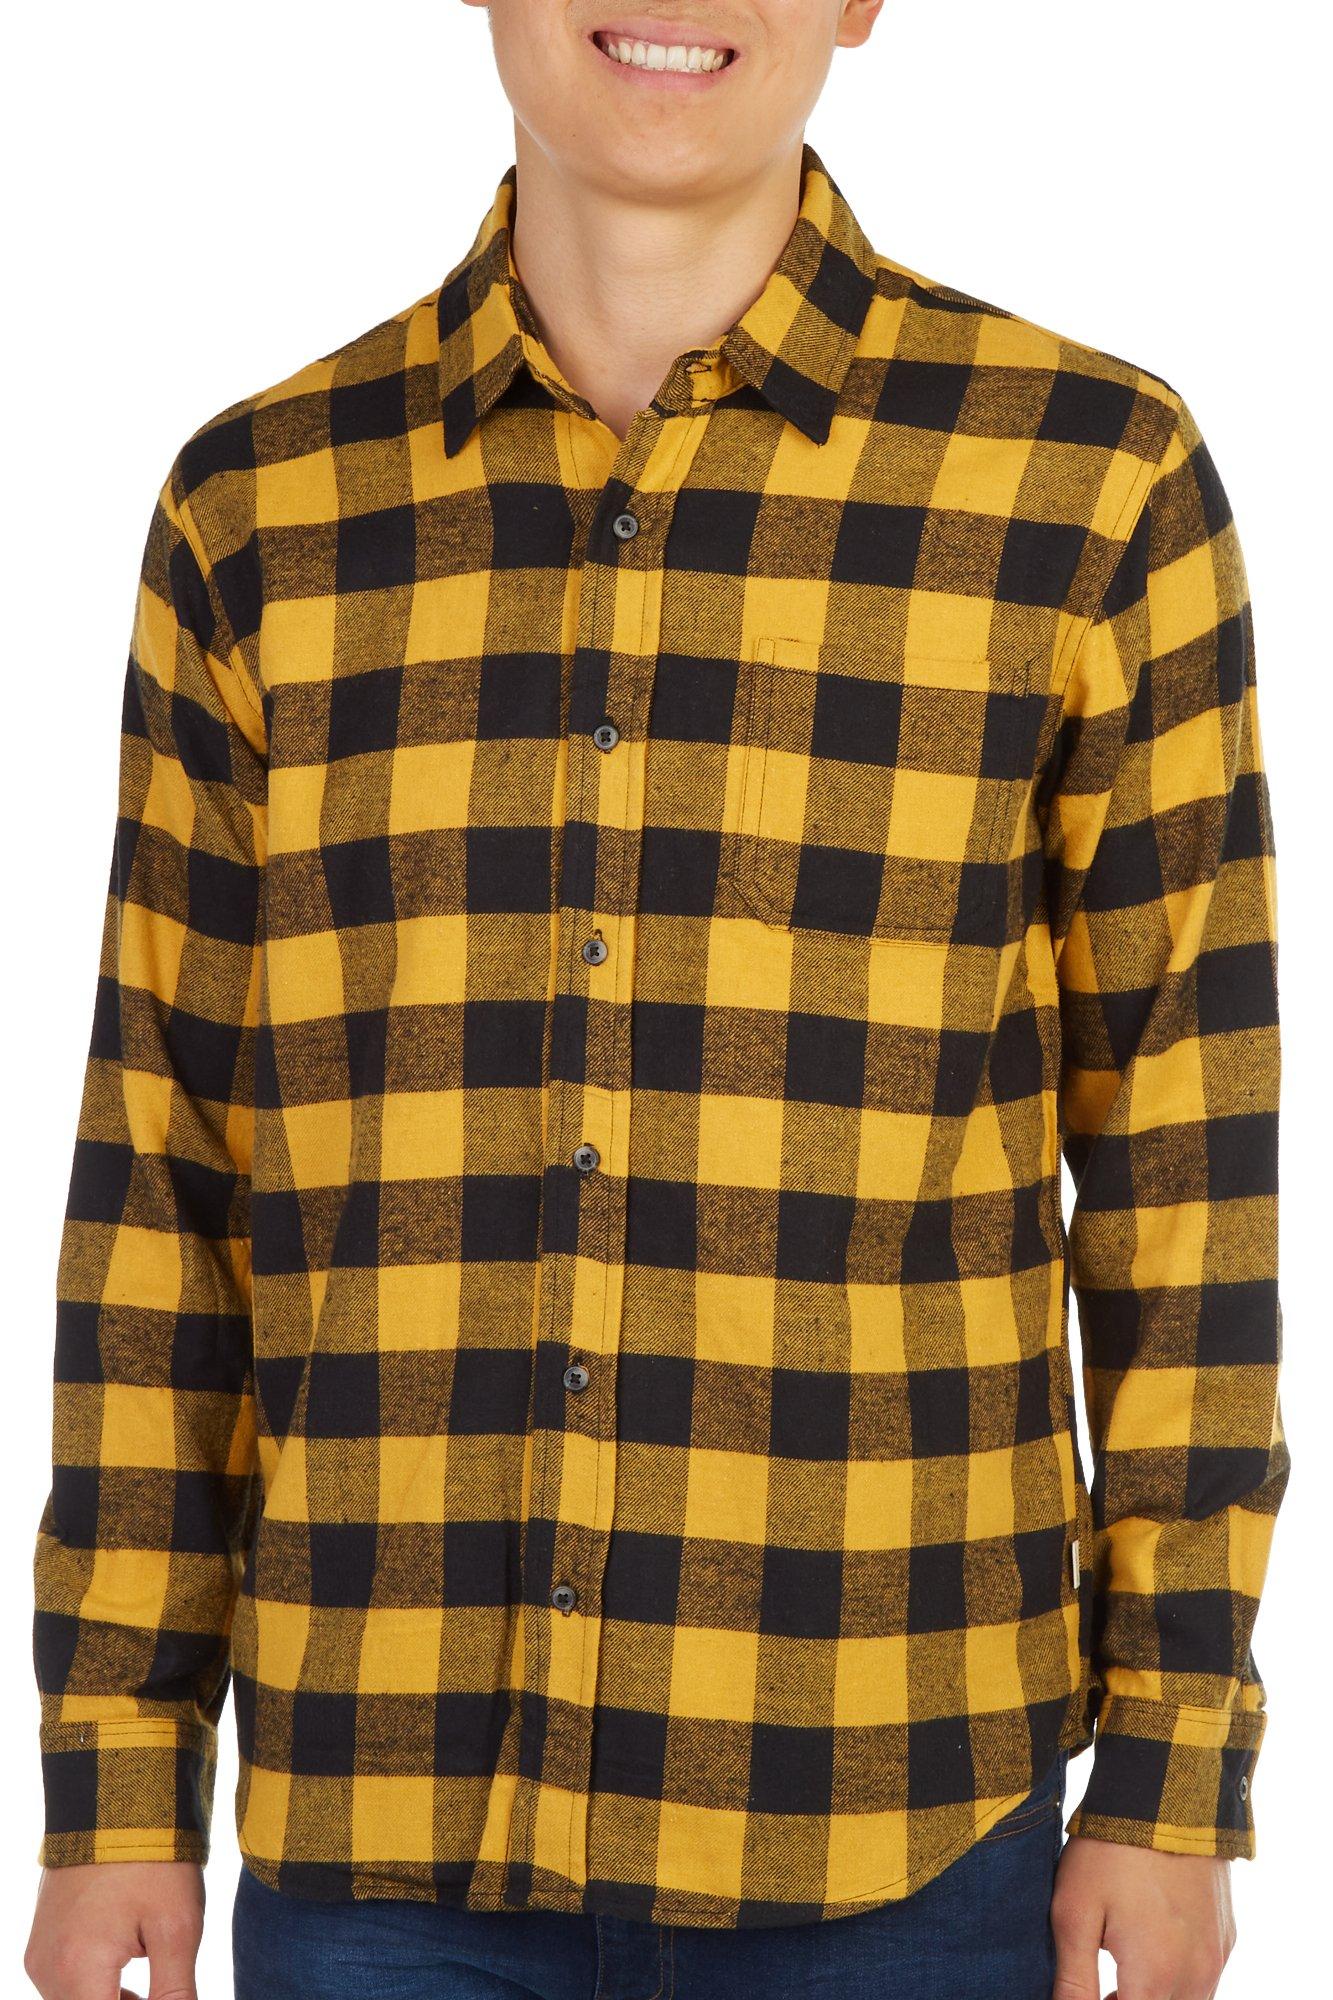 Cromoncent Men's Casual Plaid Flannel Button Down Shirt, Buffalo Black  Yellow, Medium